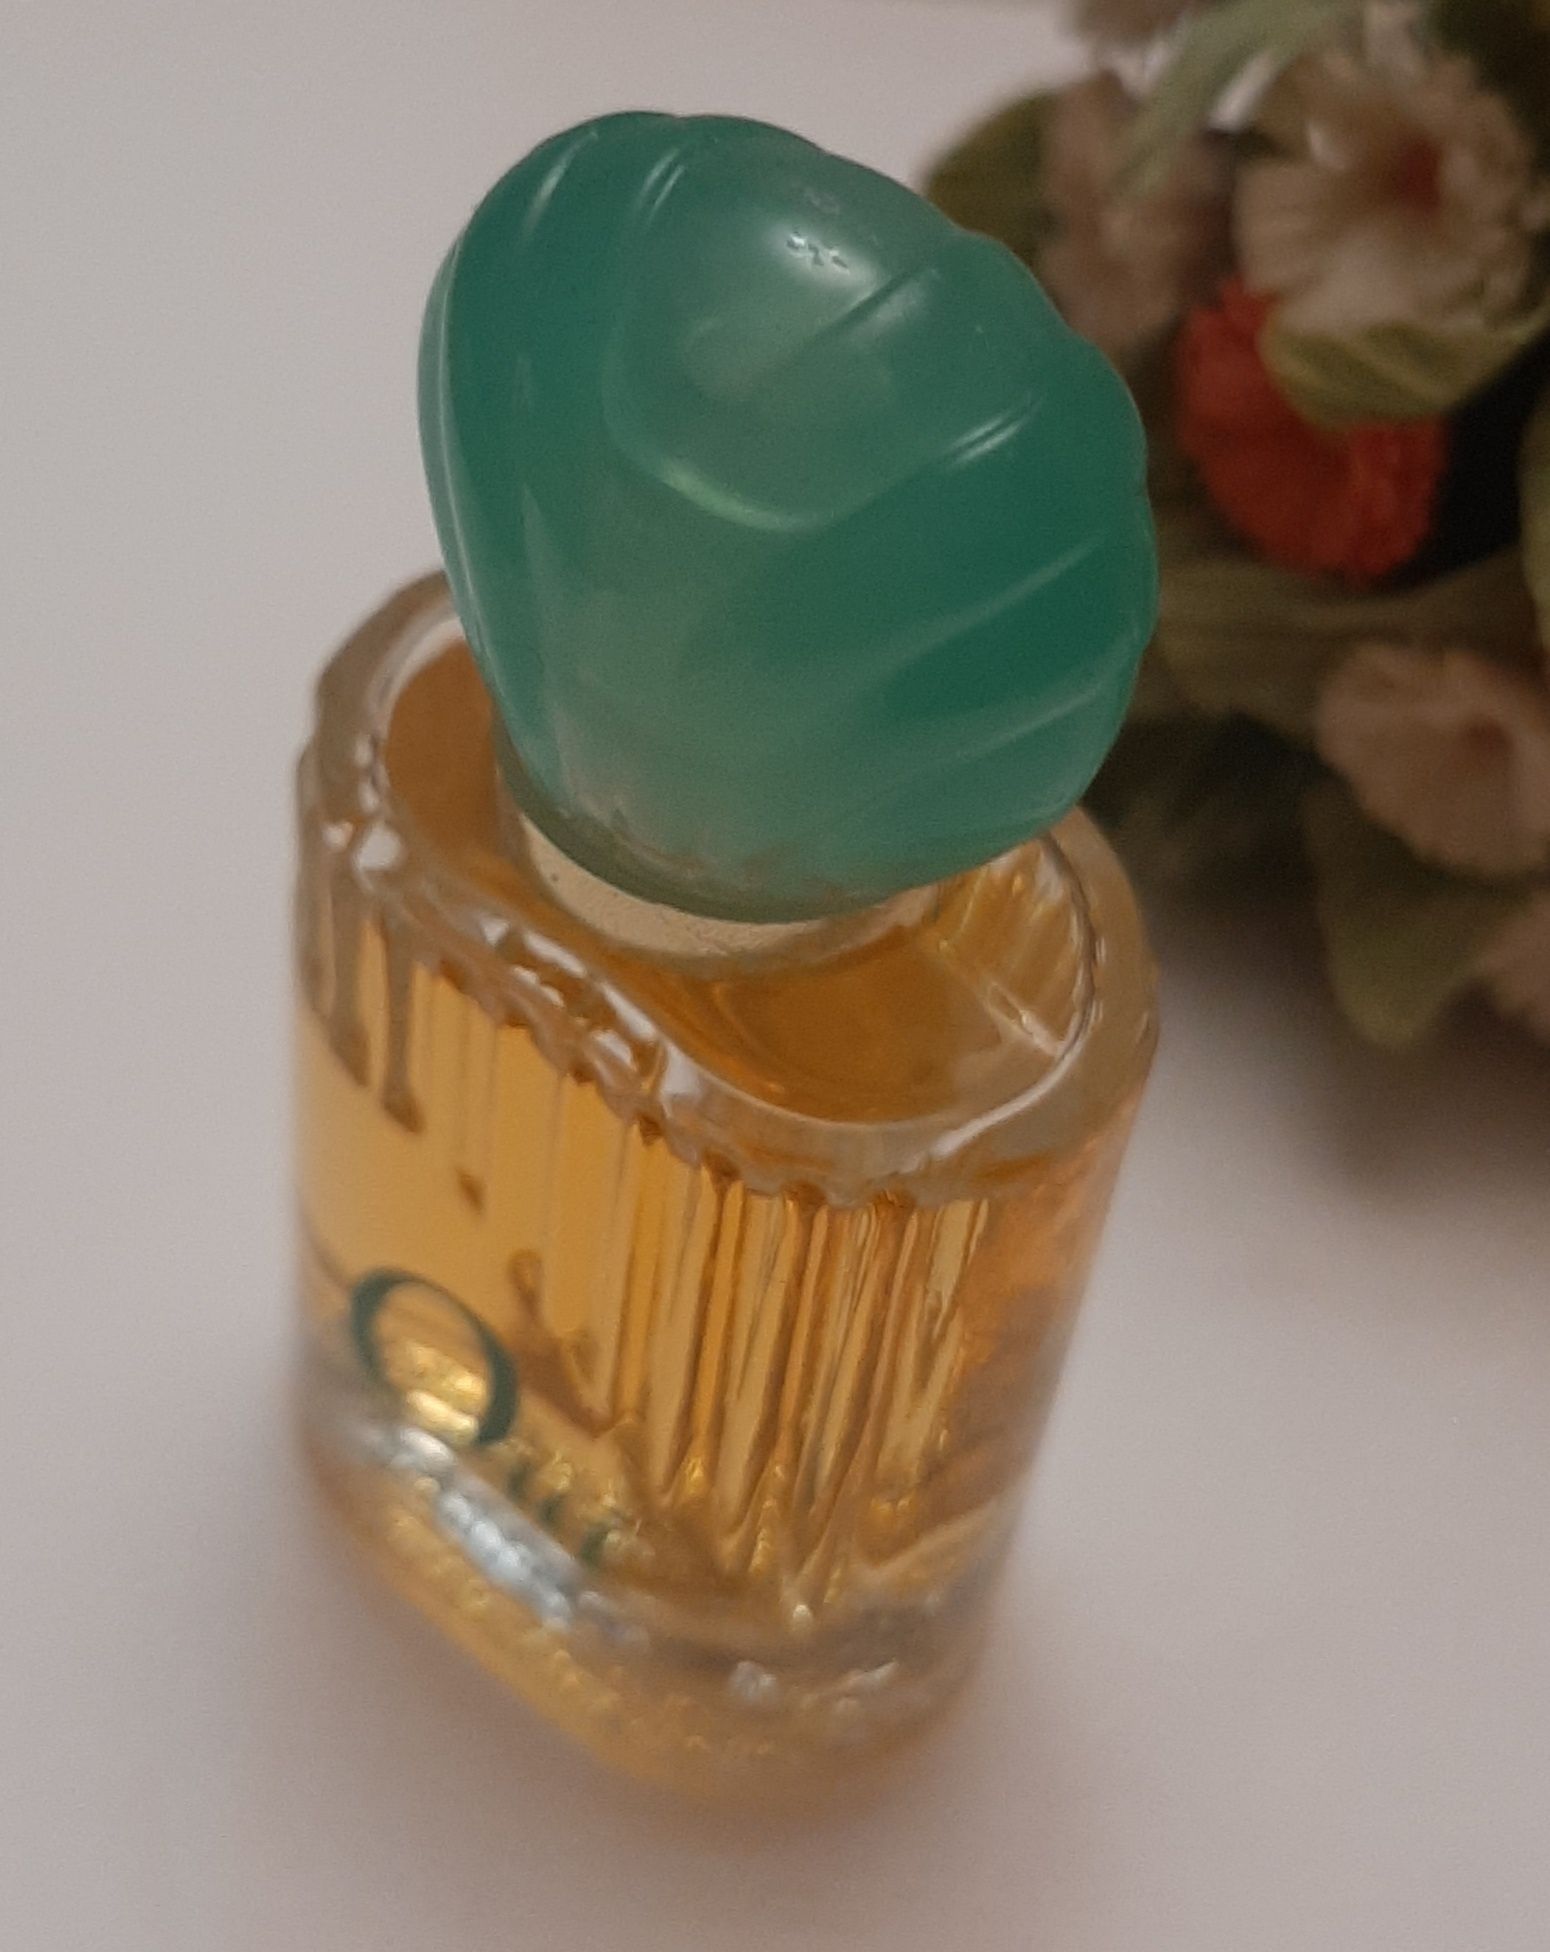 Charrier Paris Oui parfum 5 ml, miniatura vintage